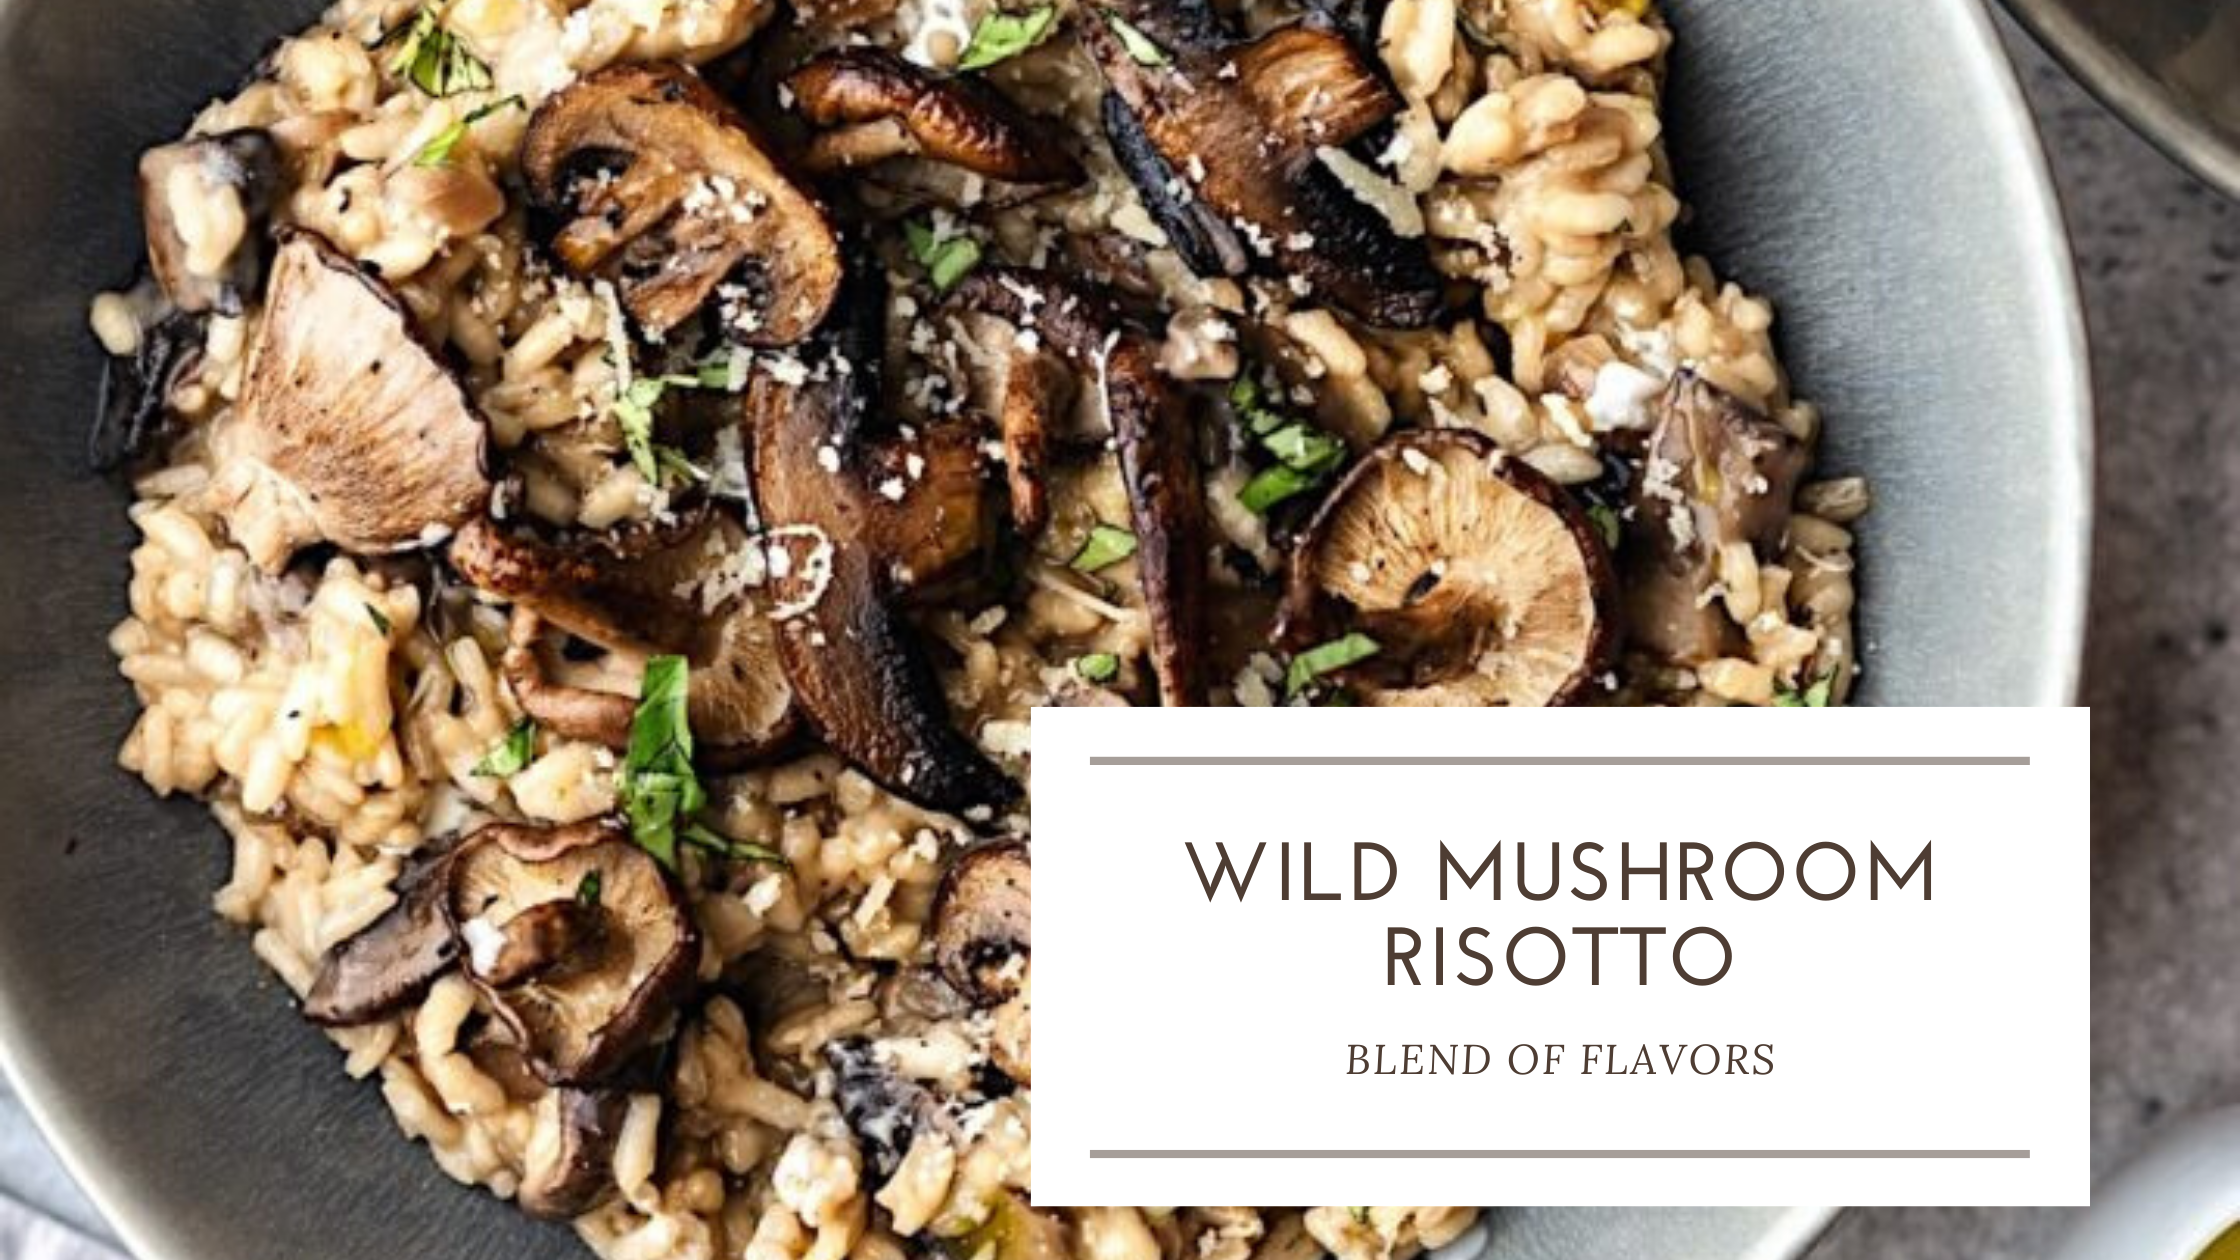 Wild mushroom risotto by Chf Ankit gaurav